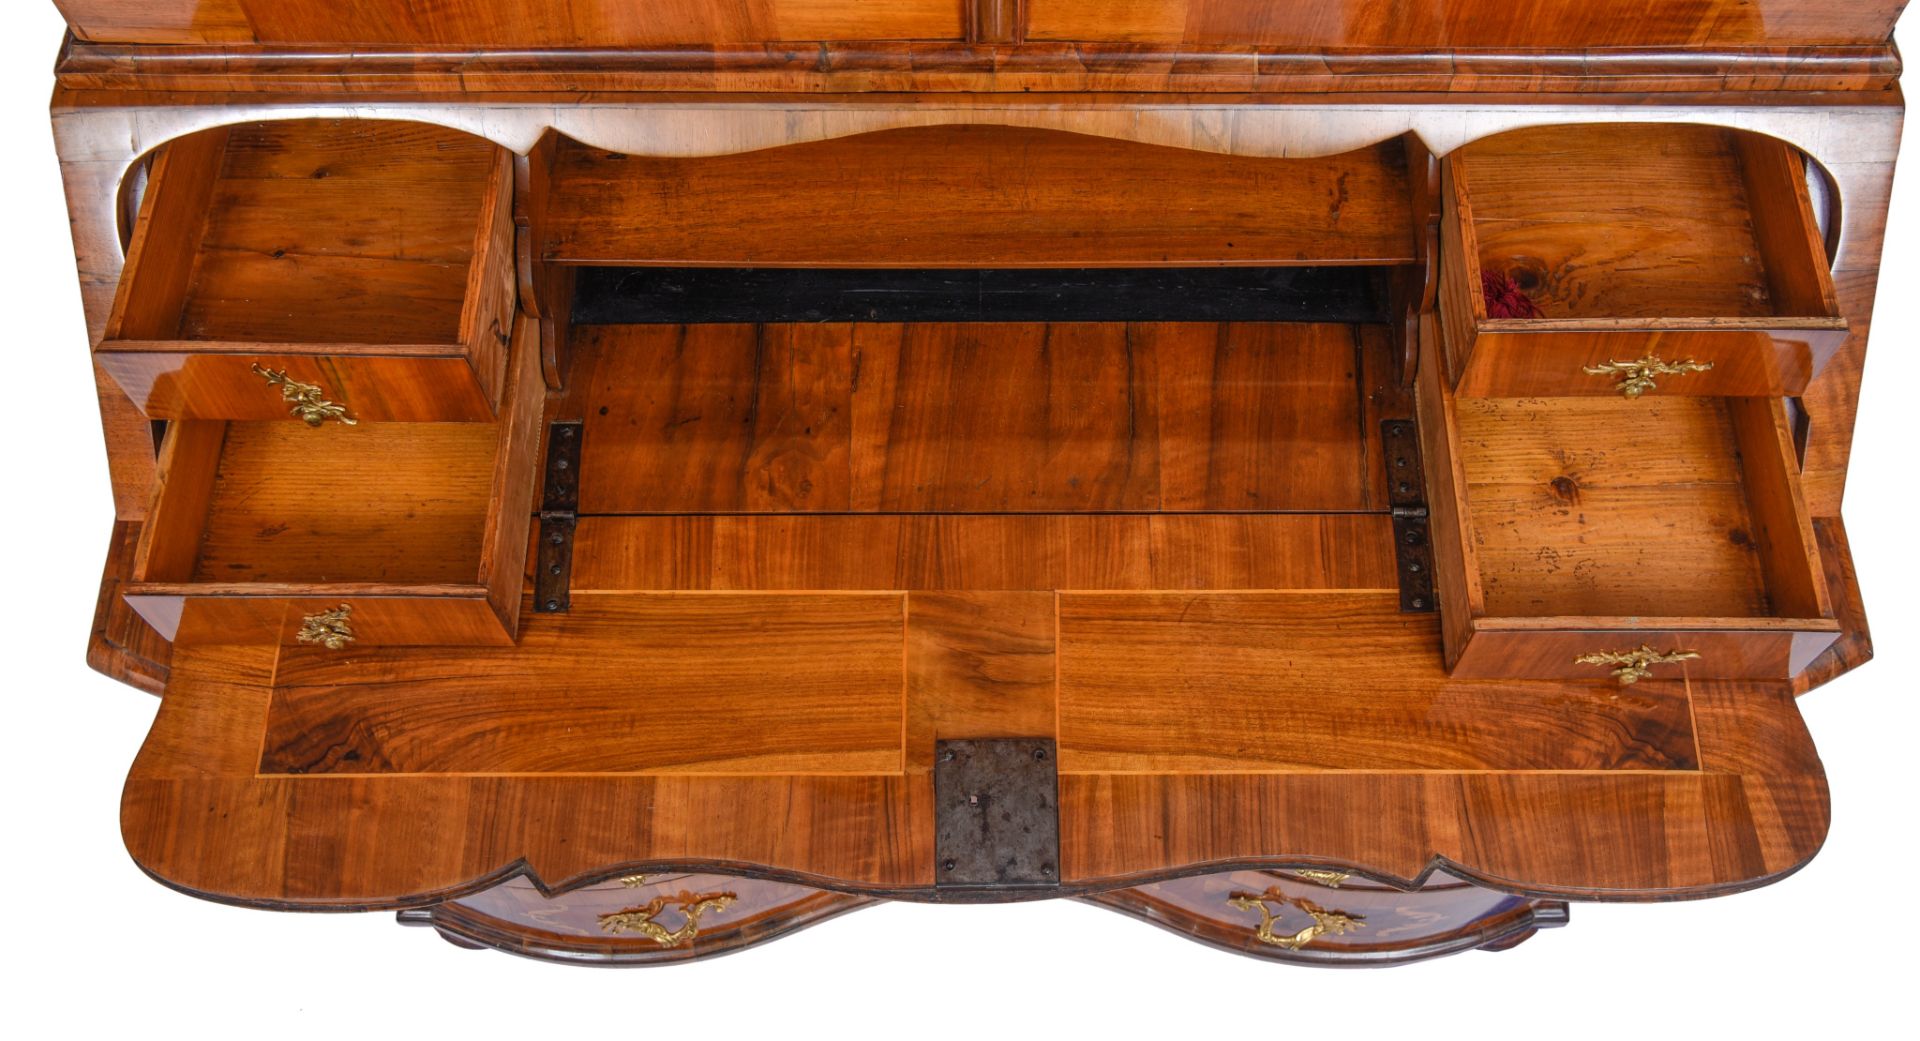 A very fine Rococo walnut bureau cabinet, mid 18thC, H 227 - W 135 - D 71 - 83 cm - Image 9 of 13